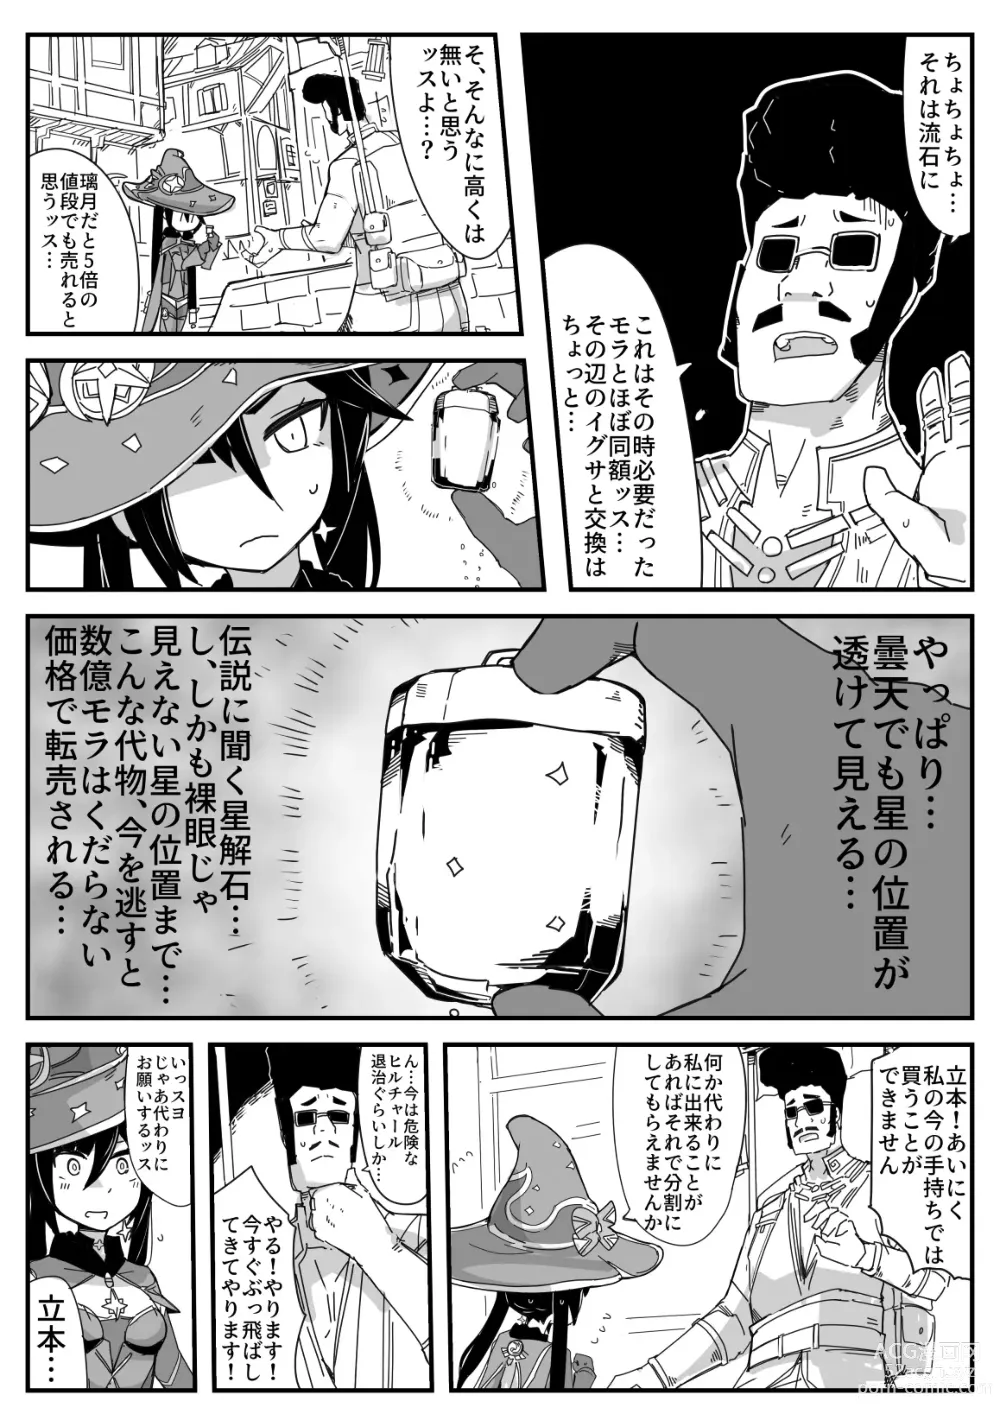 Page 3 of doujinshi Ryona no Kane 2022